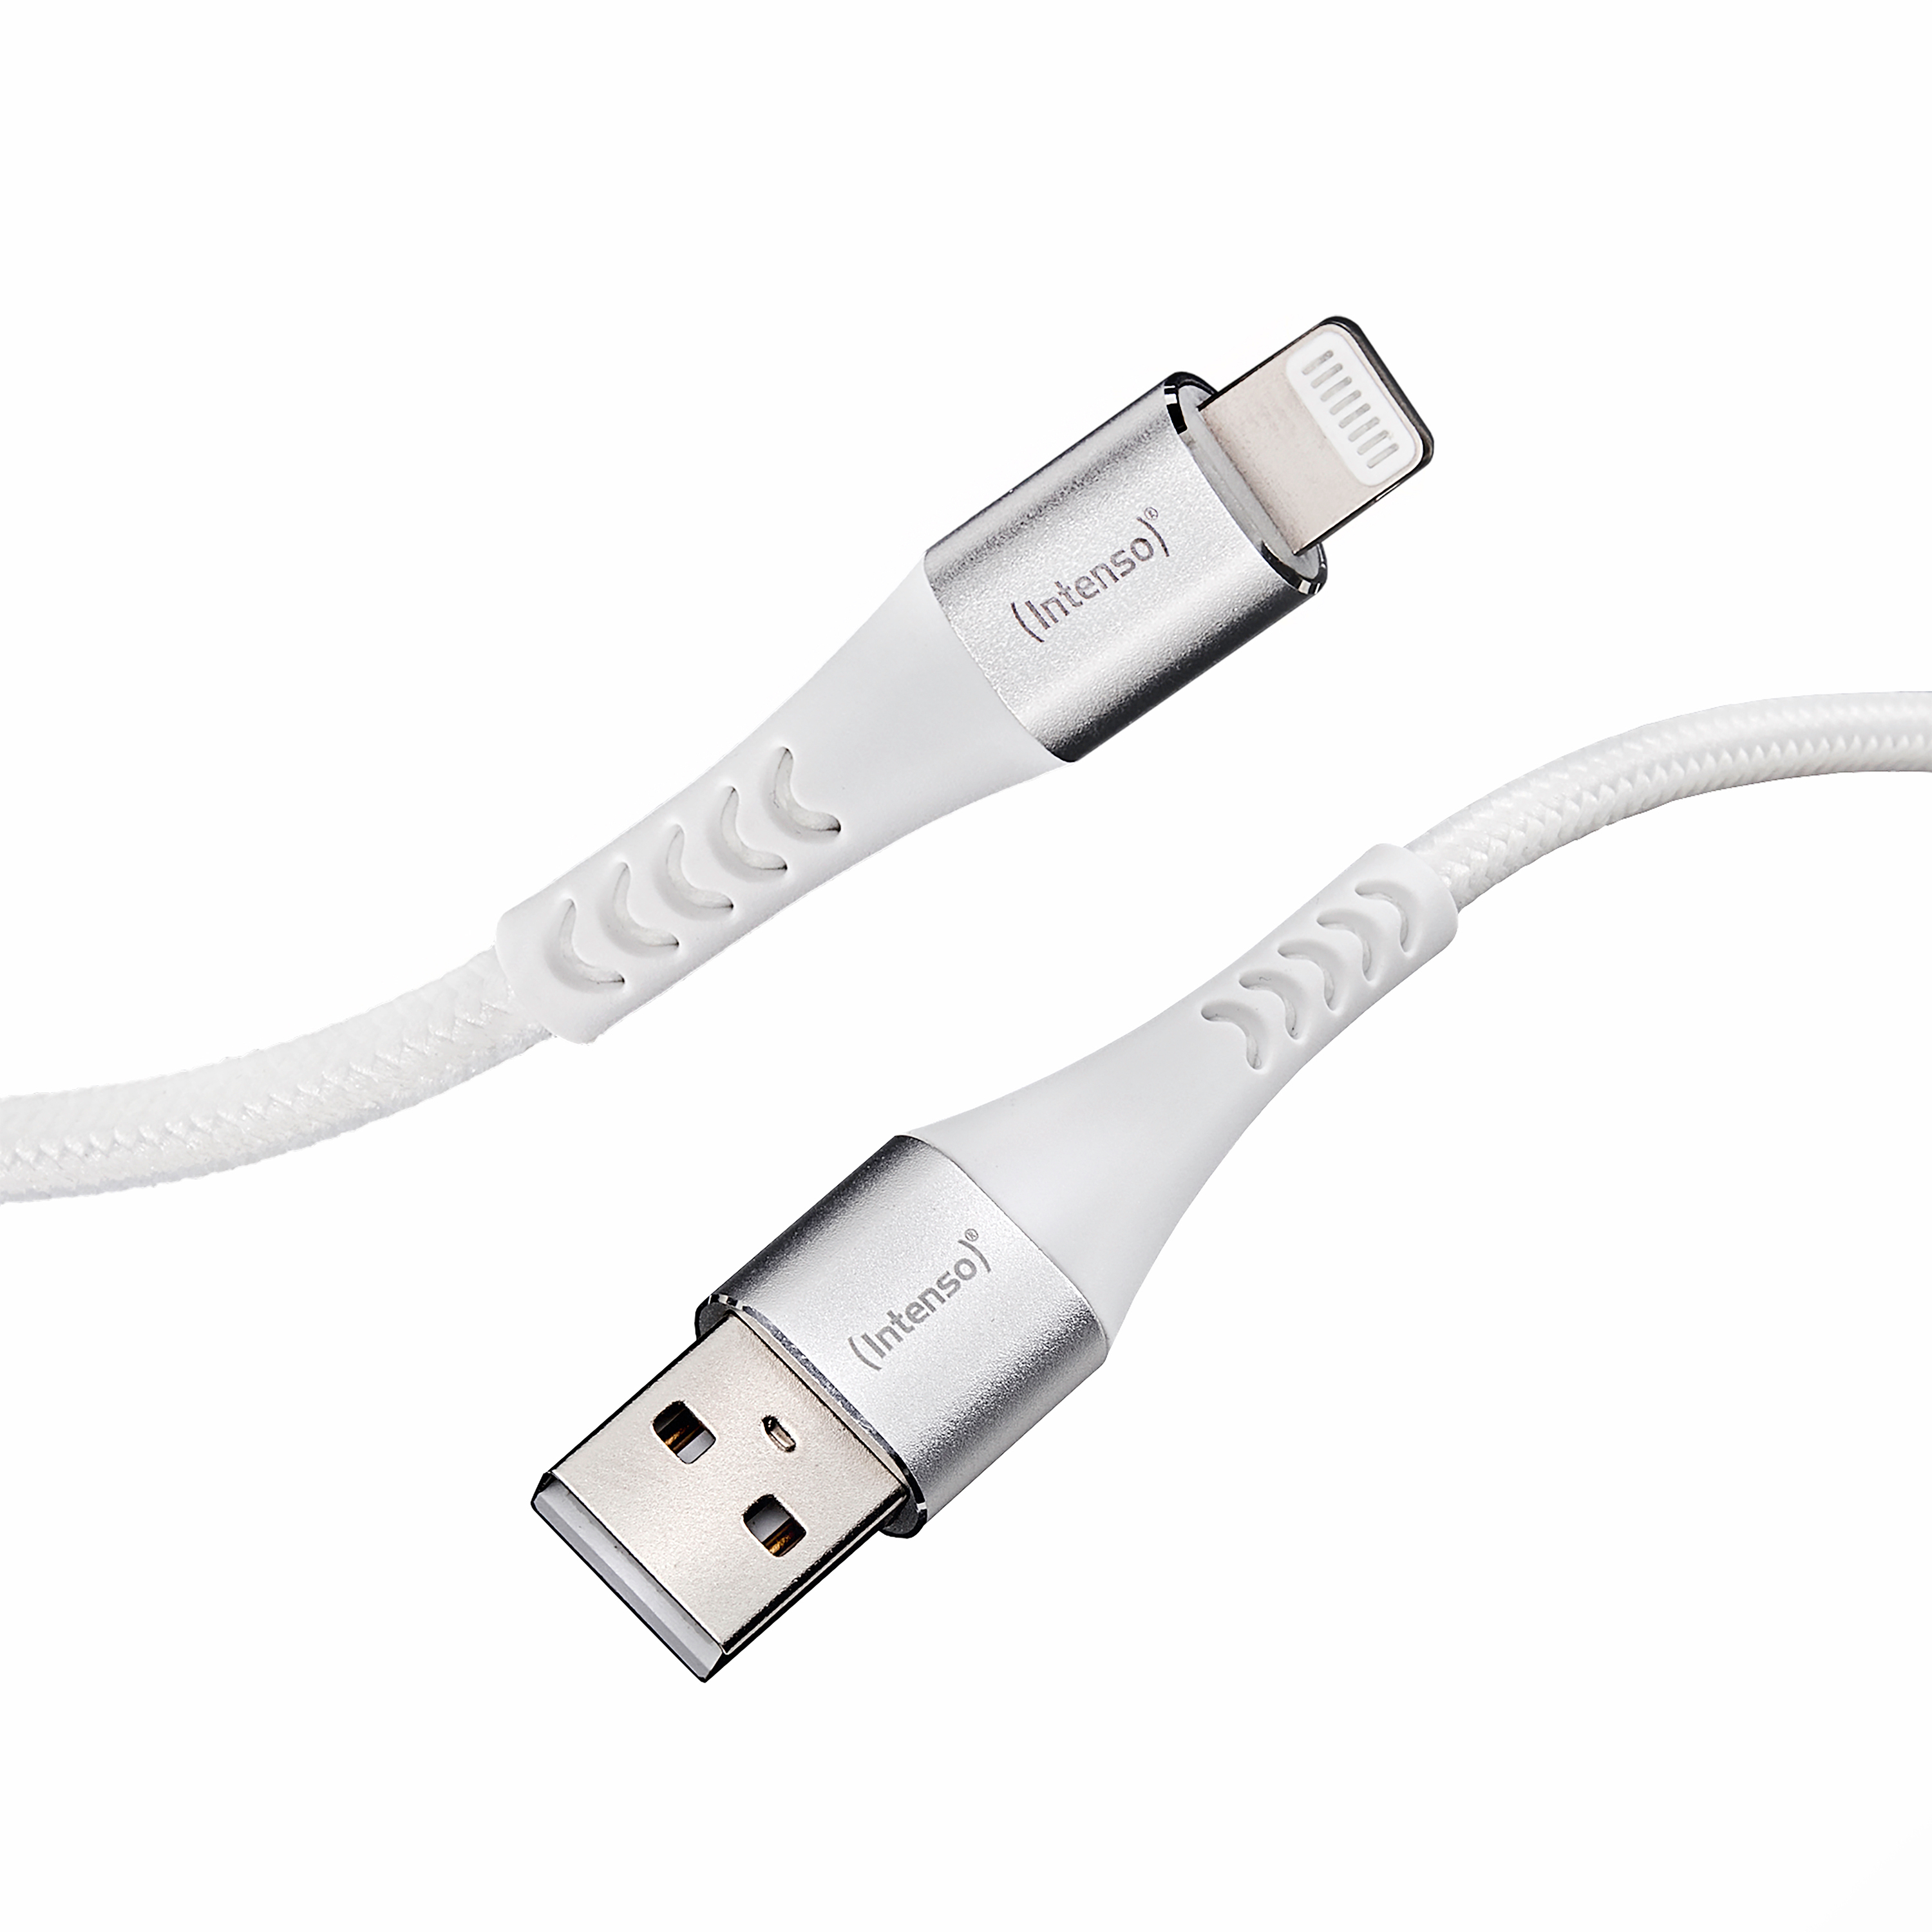 INTENSO Cable USB-A to Lightning 7902102 1.5 m, Nylon white 1.5 m, Nylon white